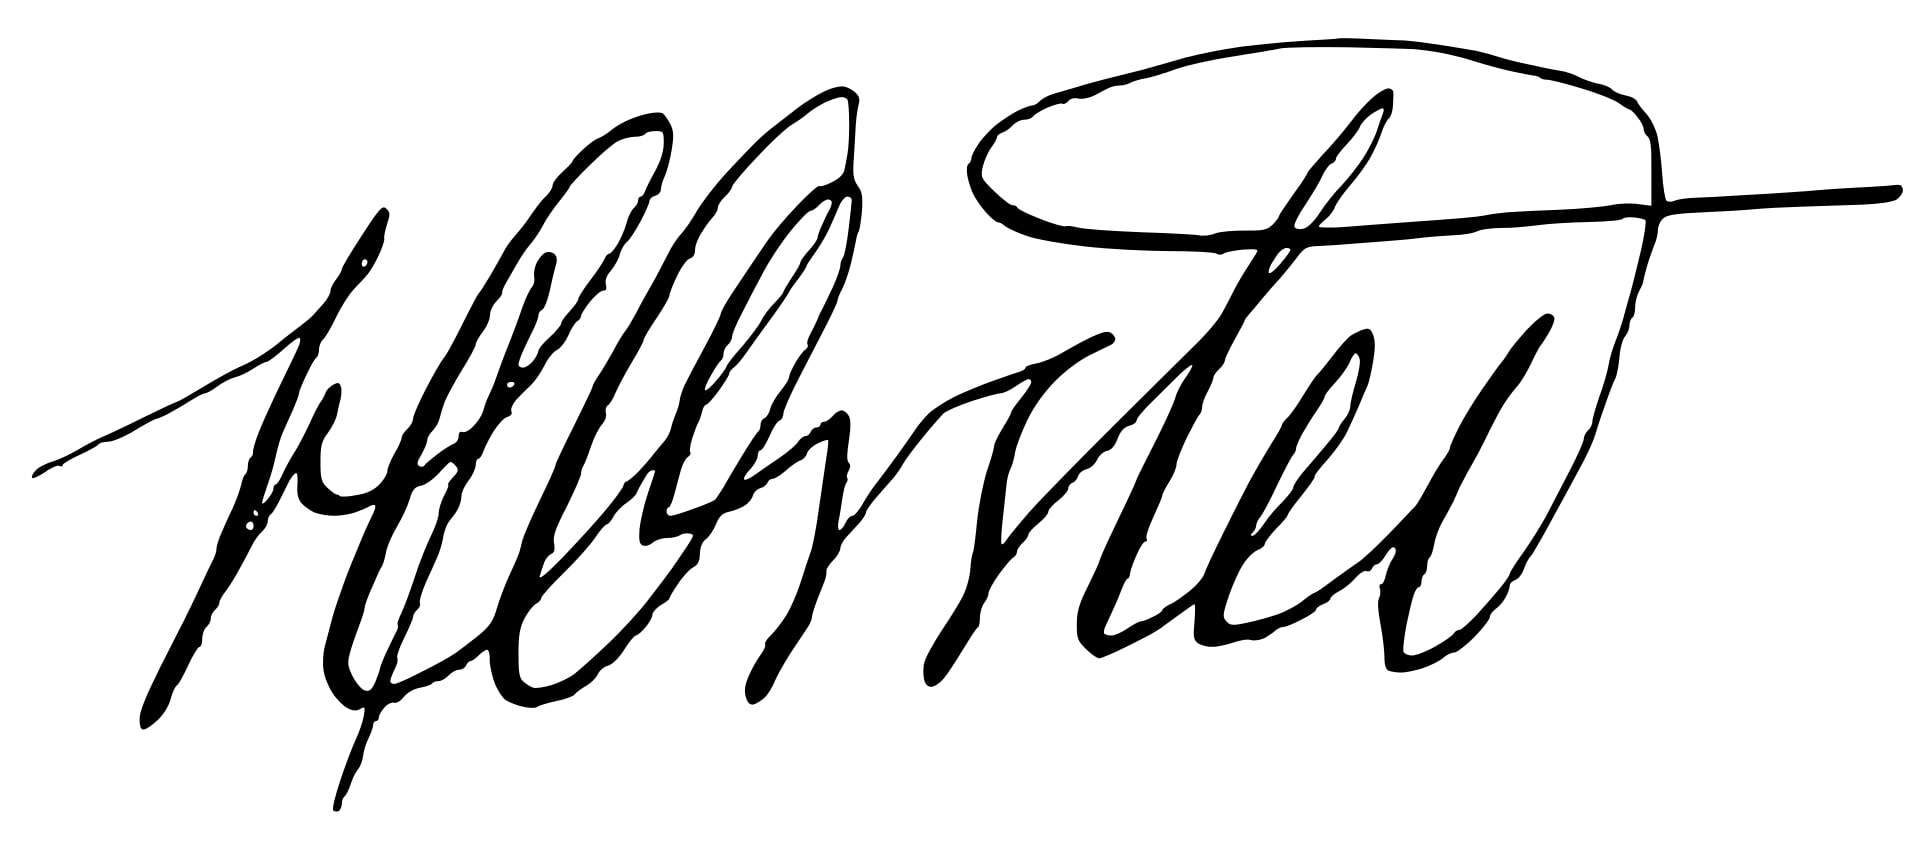 Hans Christian Ørsted Signature